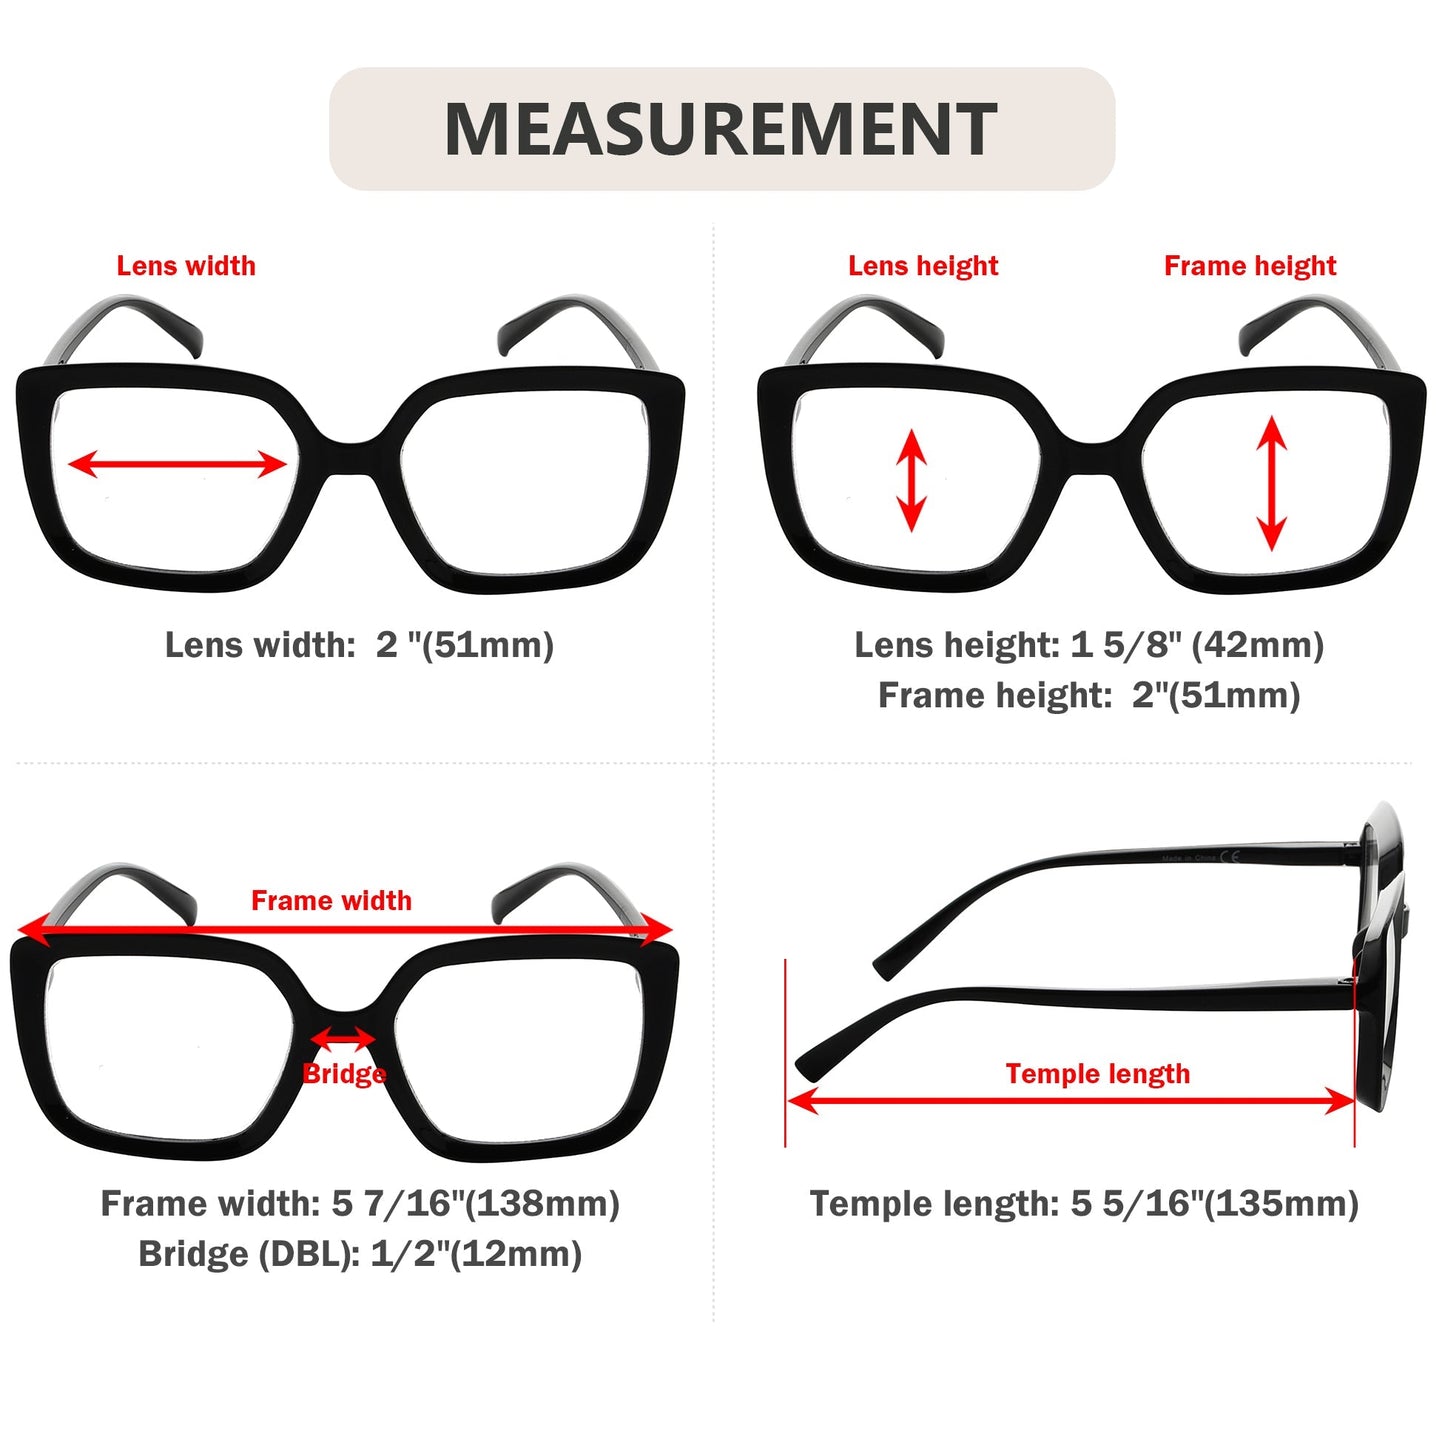 4 Pack Oversize Stylish Reading Glasses For Women R2014